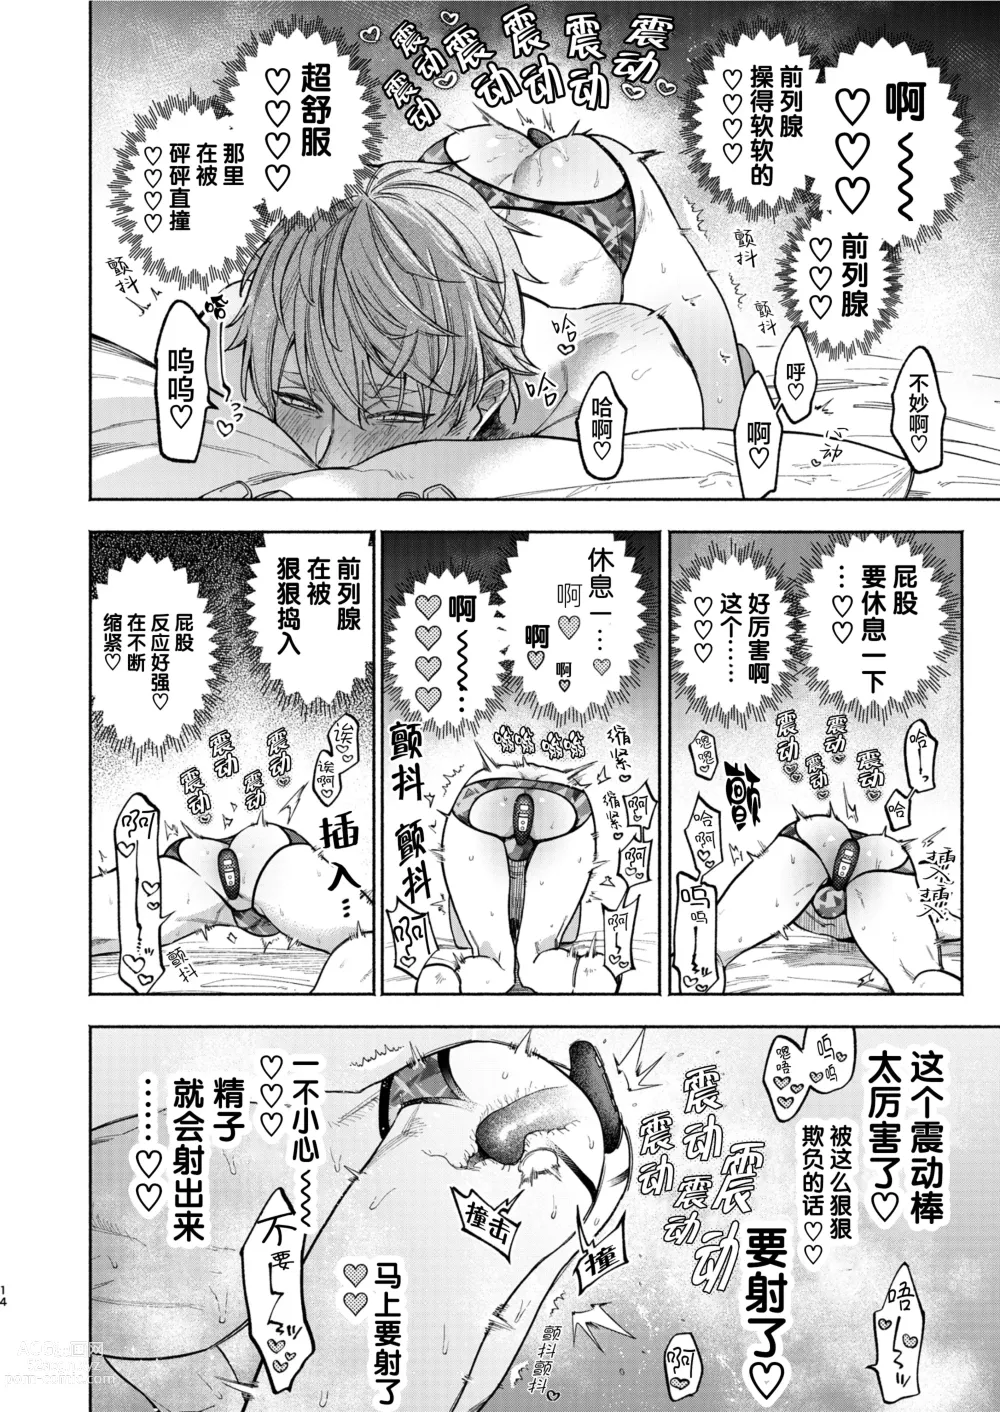 Page 14 of doujinshi 好雨配闲时、该当肆意寻欢慰己